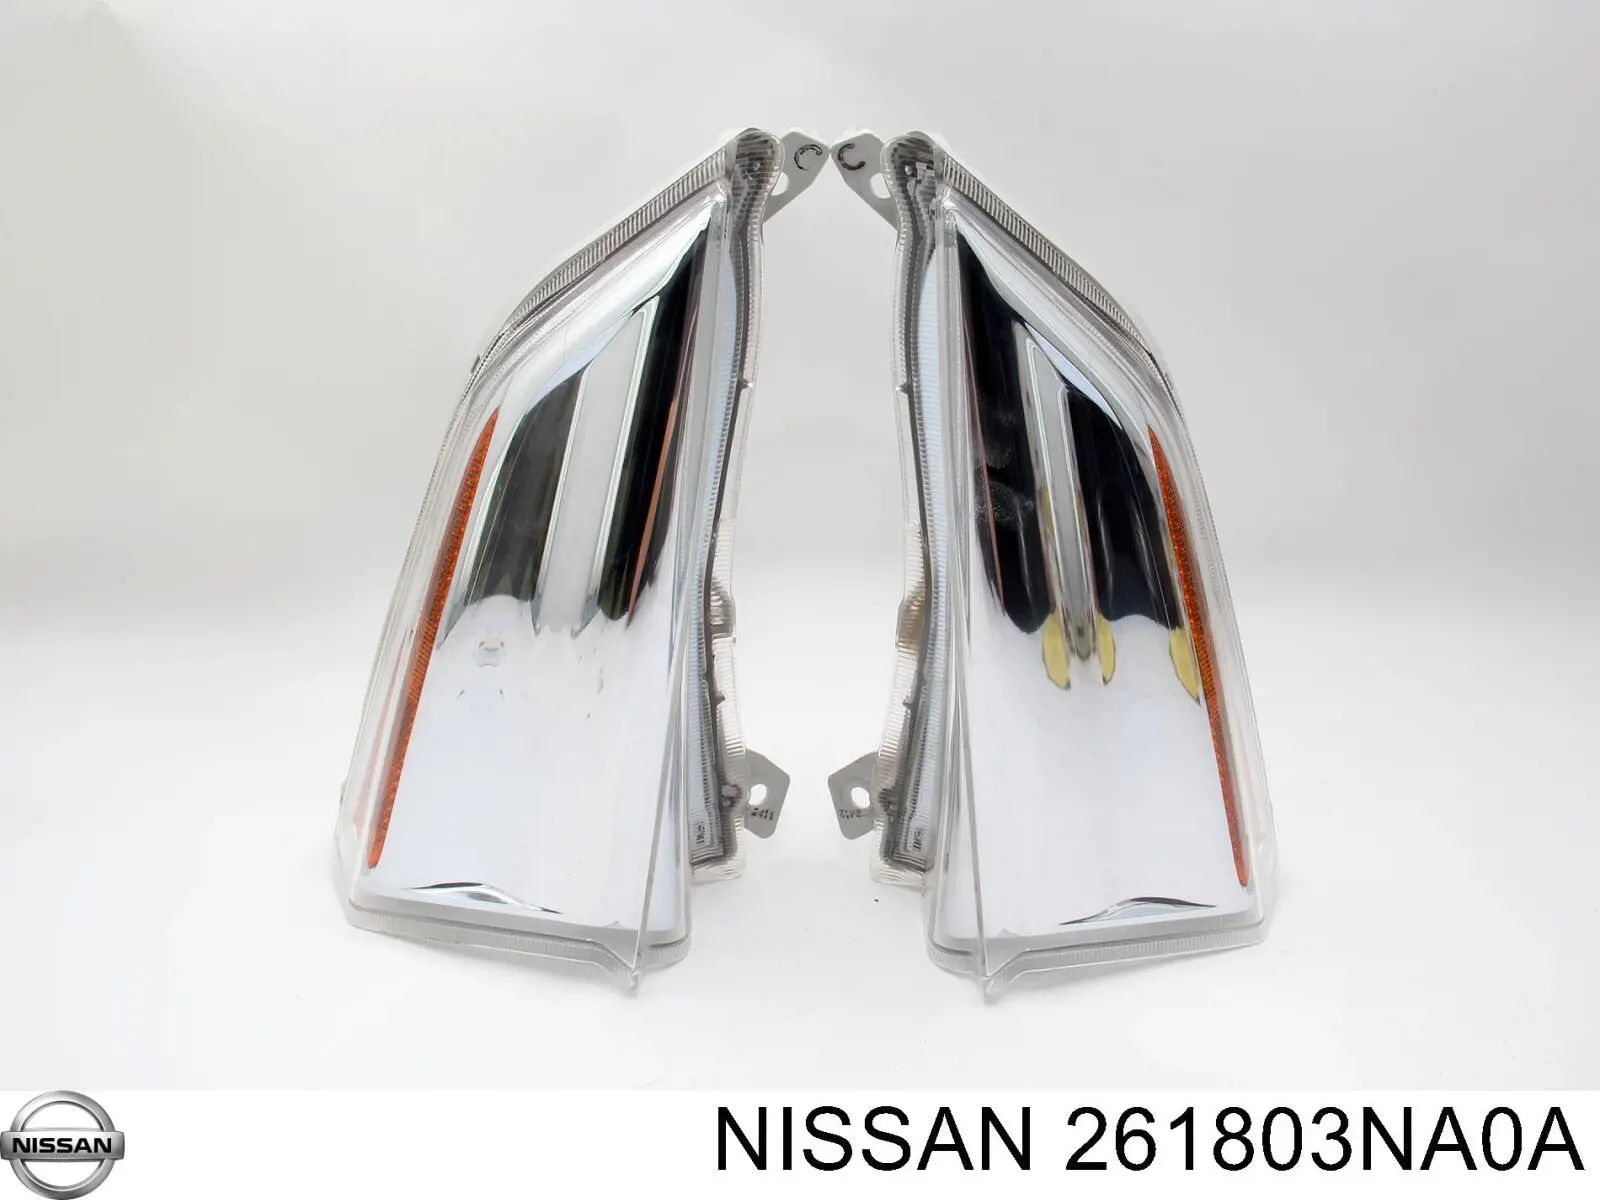 261803NL0A Nissan pisca-pisca direito